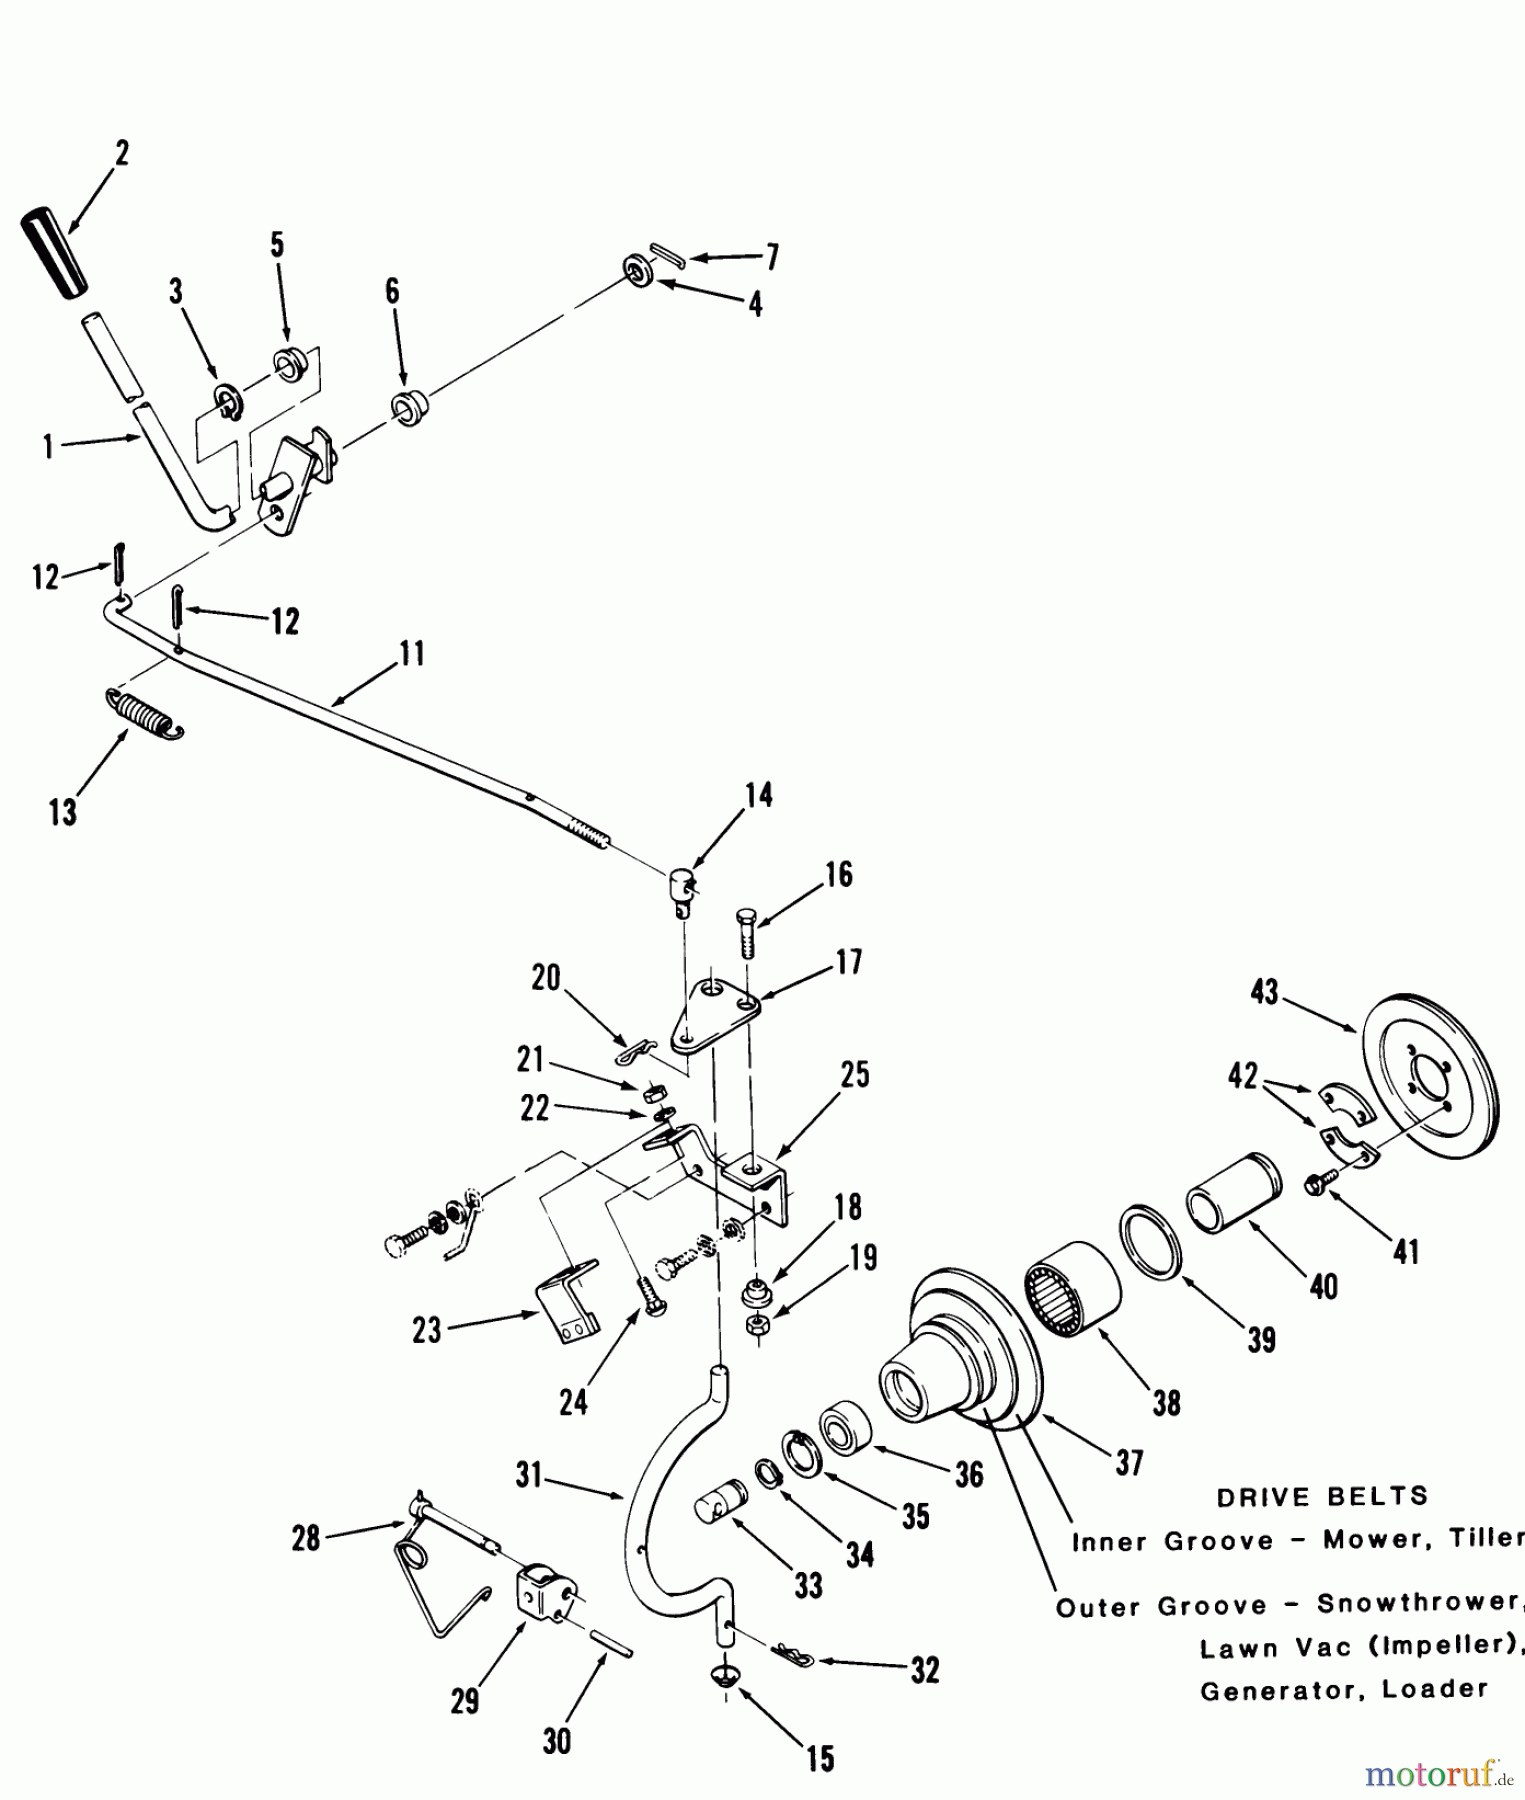  Toro Neu Mowers, Lawn & Garden Tractor Seite 1 11-14KE01 (C-145) - Toro C-145 Automatic Tractor, 1984 PTO CLUTCH AND CONTROL